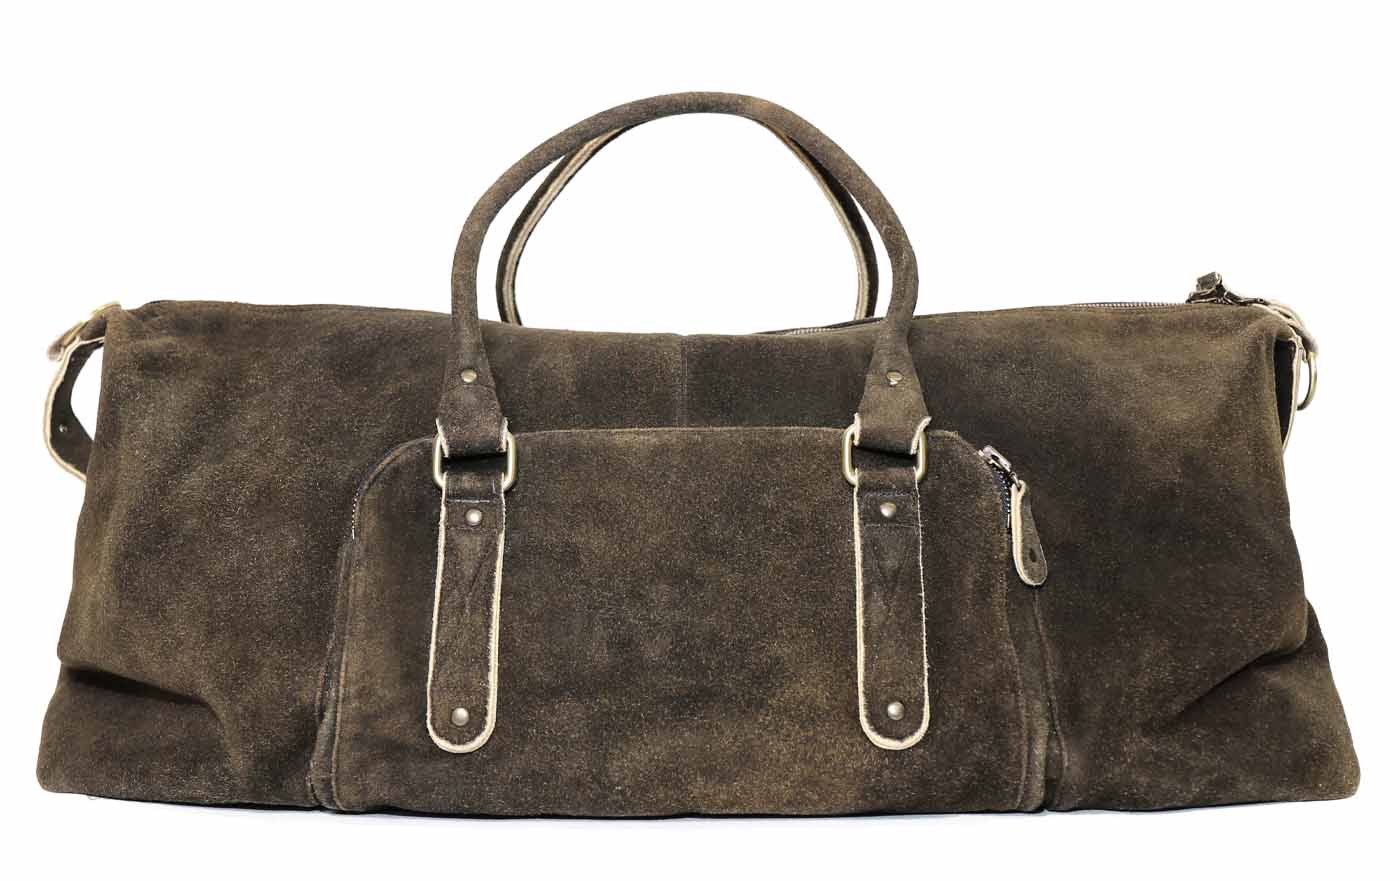 Deer Leather Bag “Endeavour”, maple